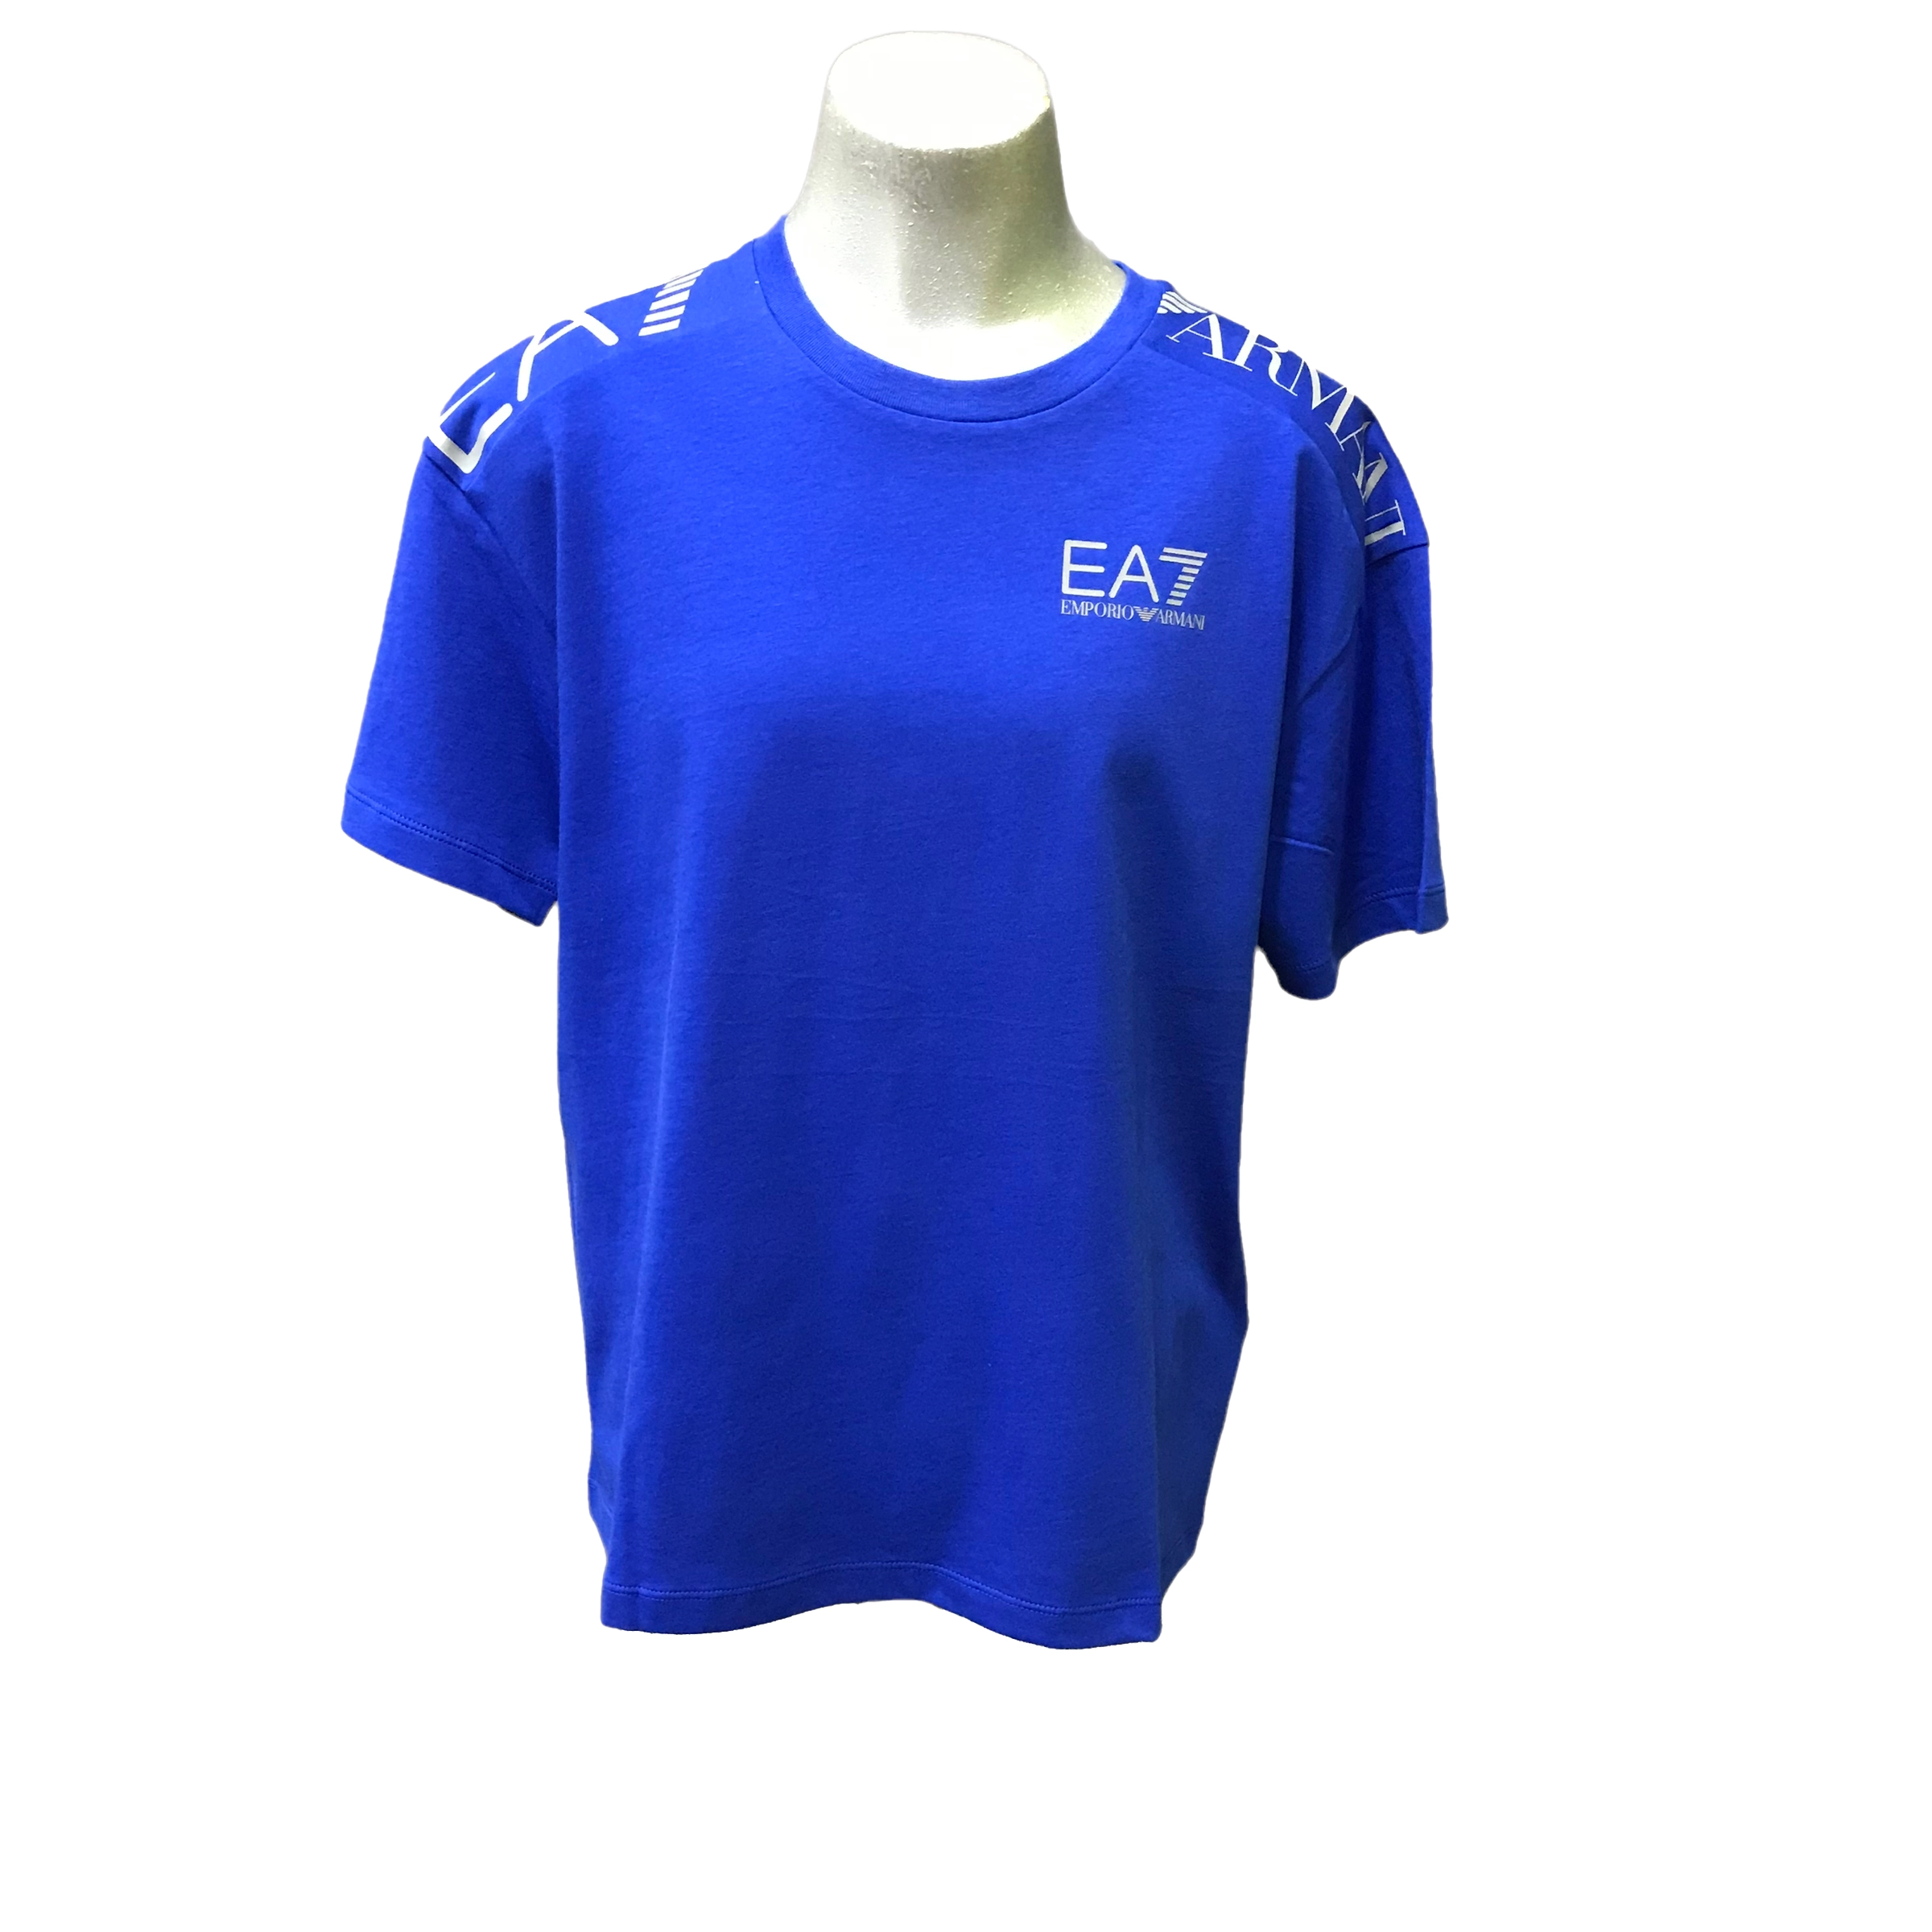 Armani EA7 Camiseta chico azul royal logo en hombro